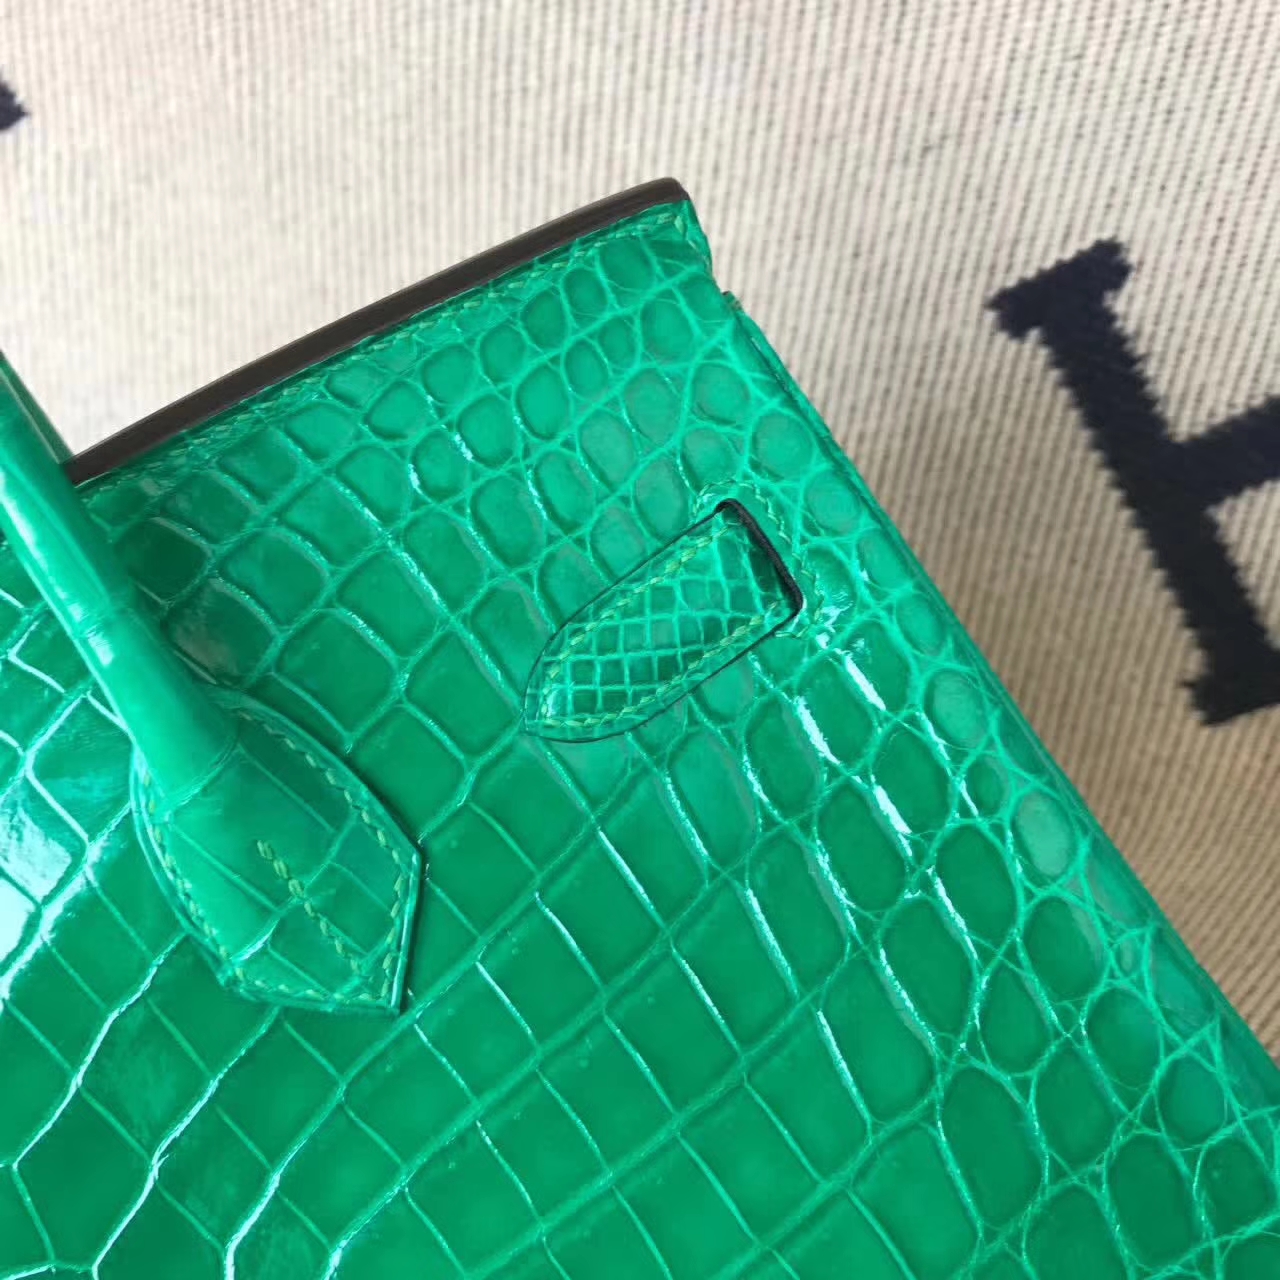 New Arrival Hermes 6Q Emerald Green Crocodile Shiny Leather Birkin30cm Bag